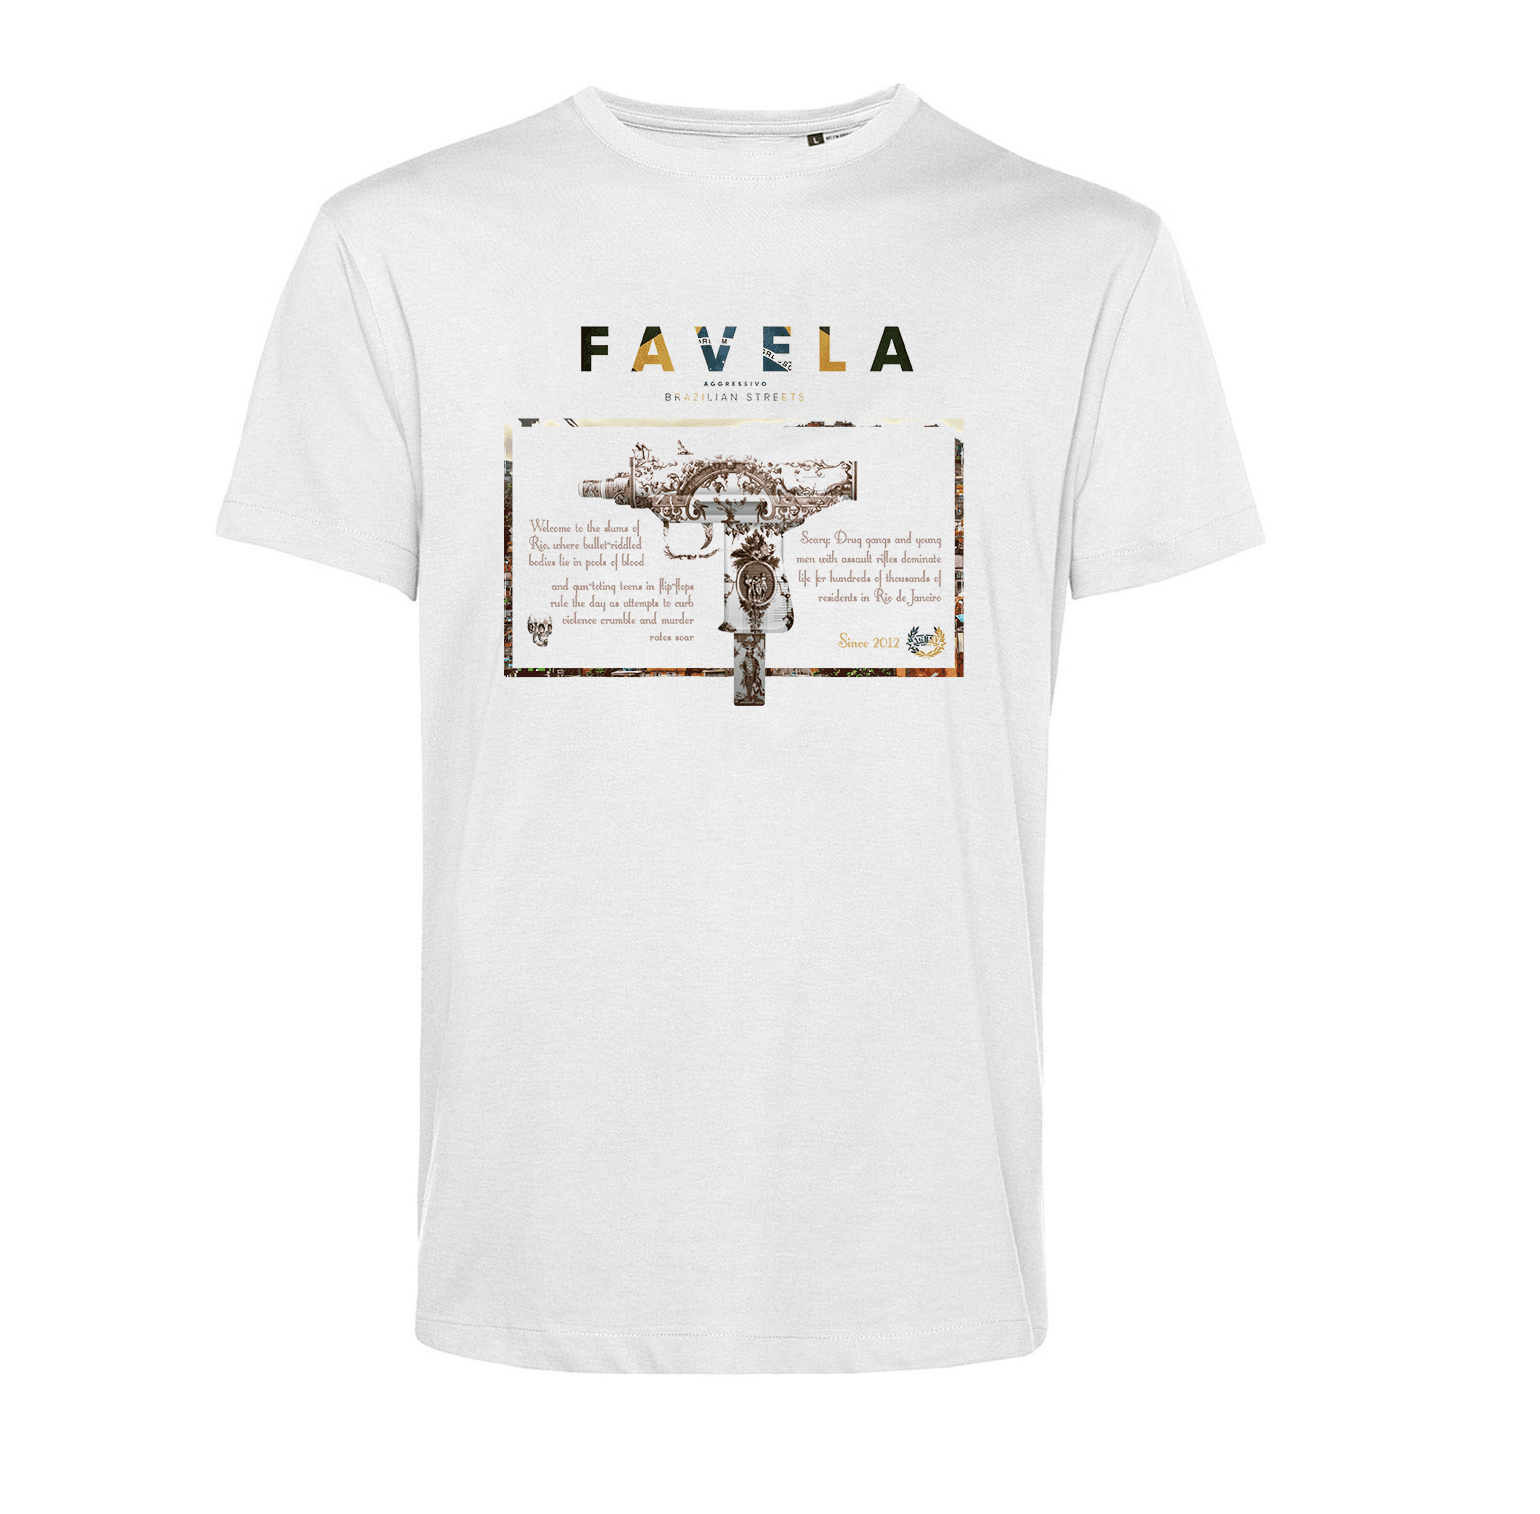 FAVELA (WHITE)